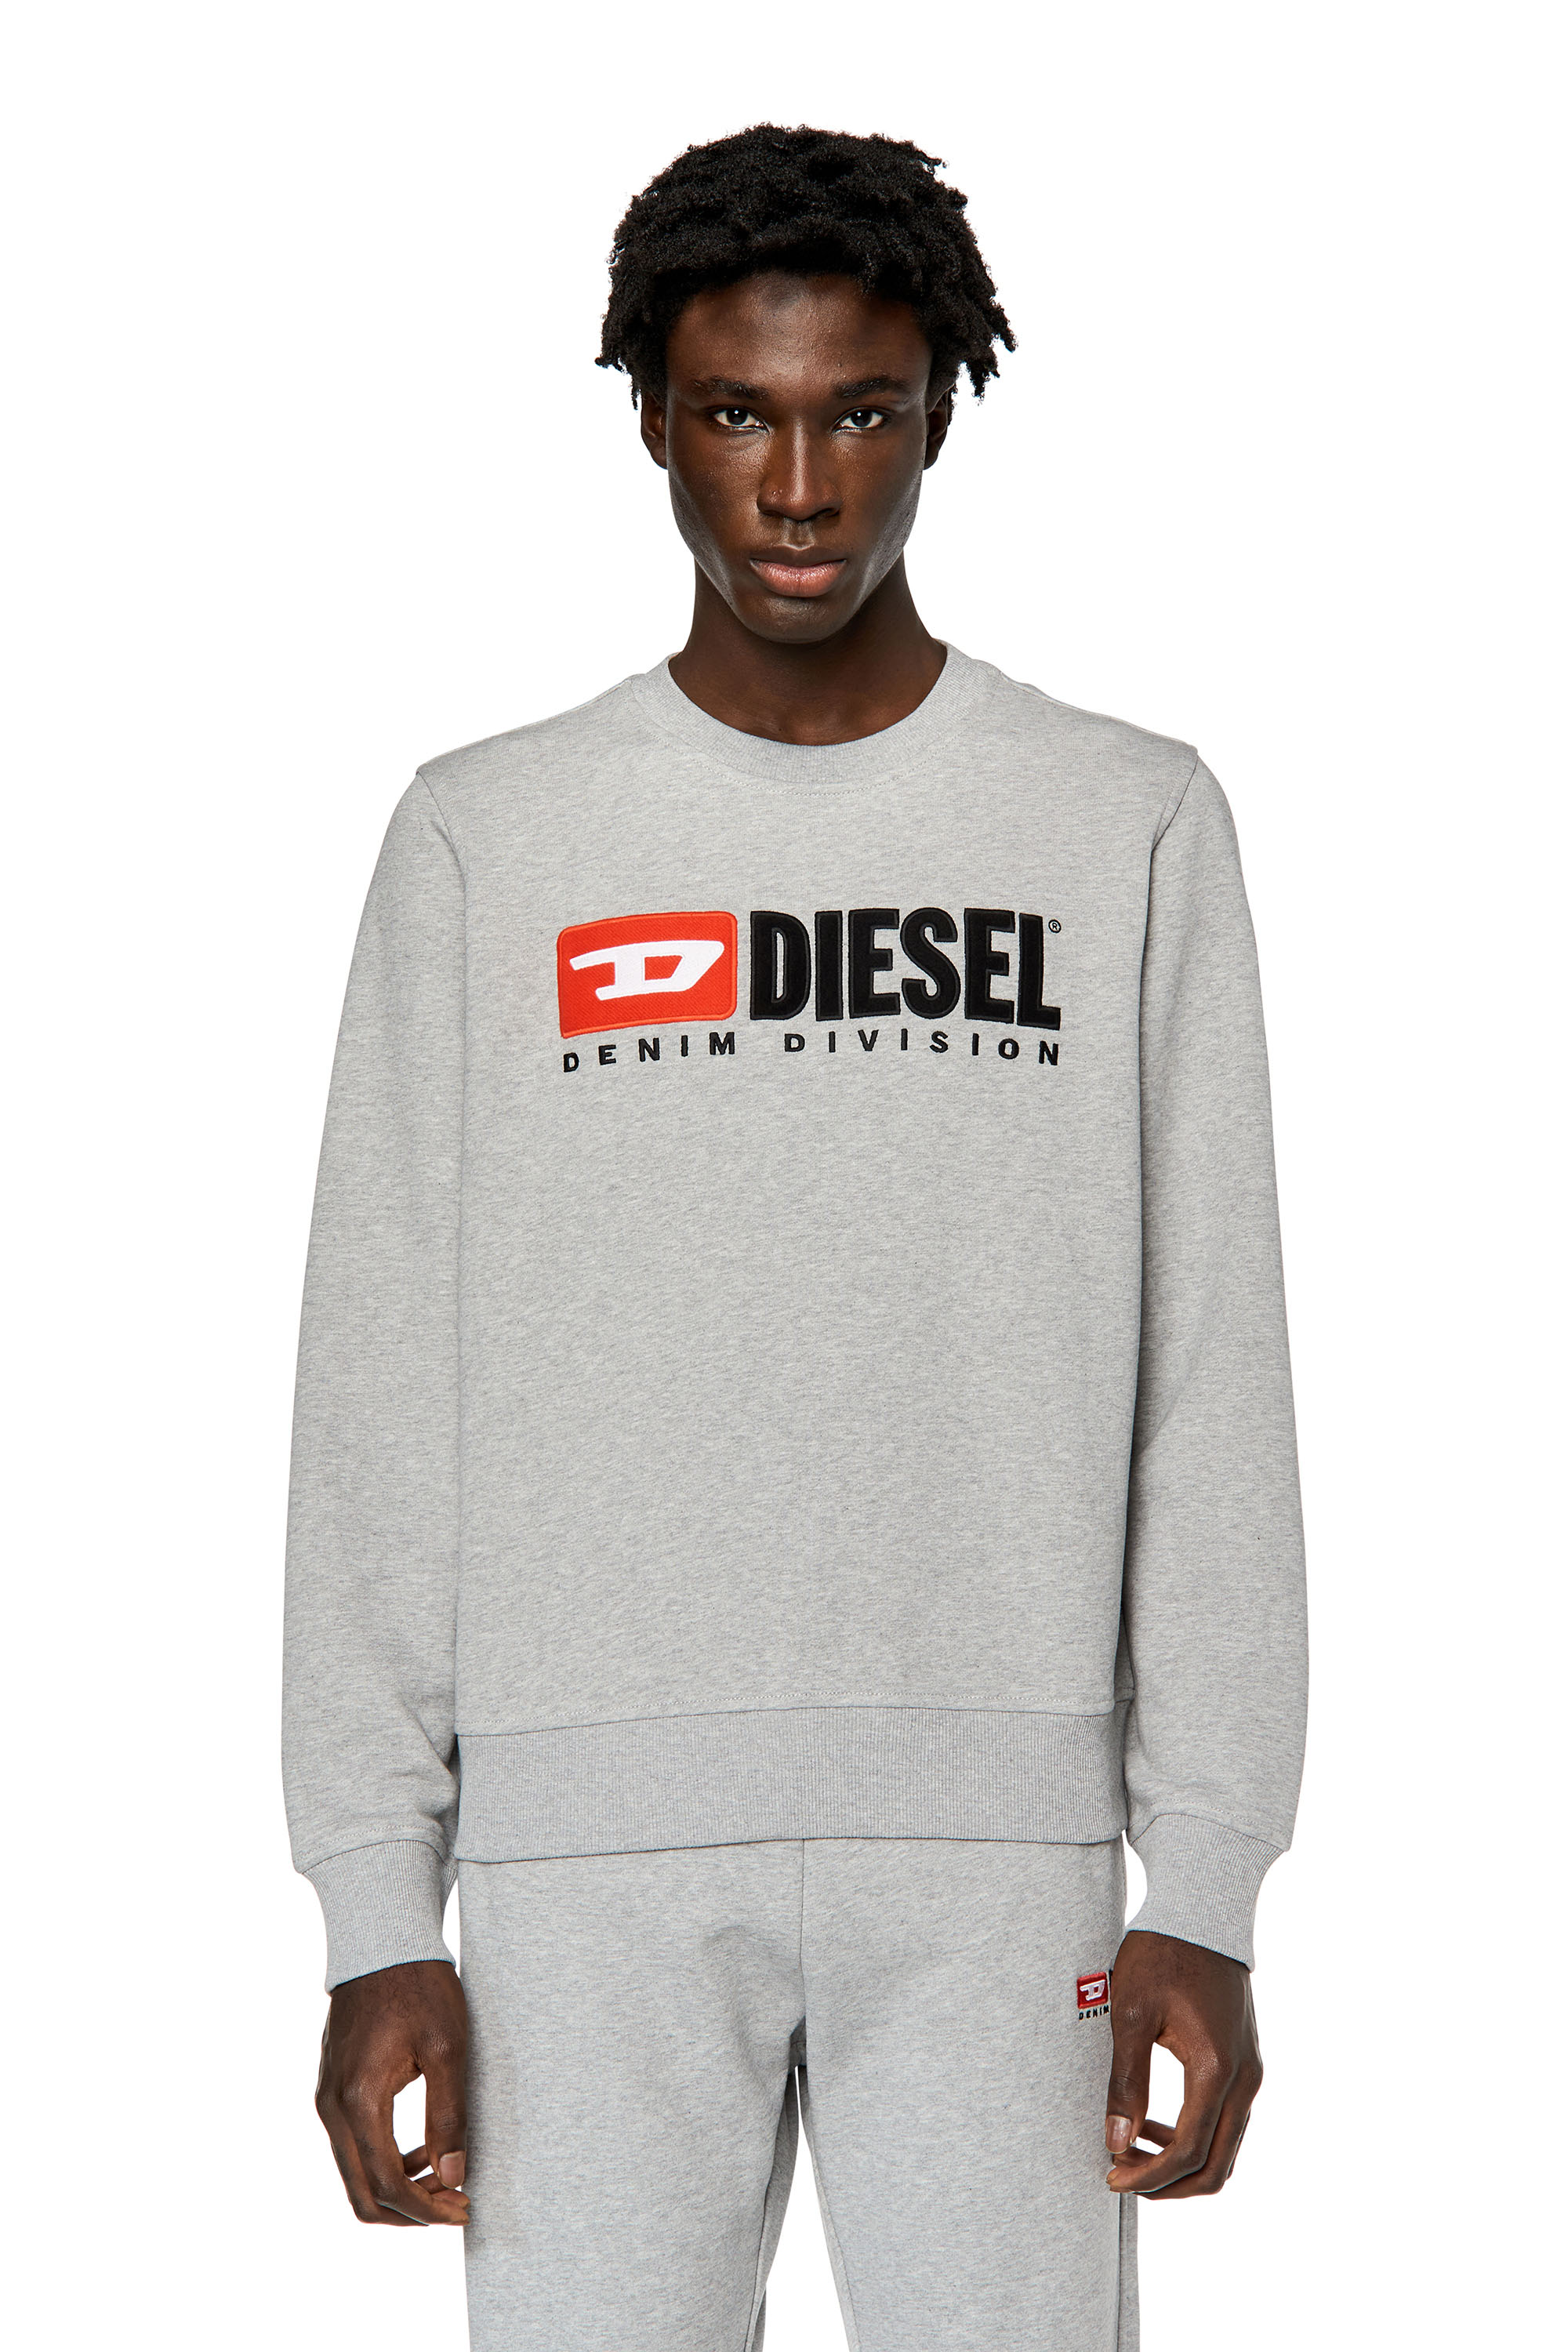 Diesel - S-GINN-DIV, Grey - Image 1